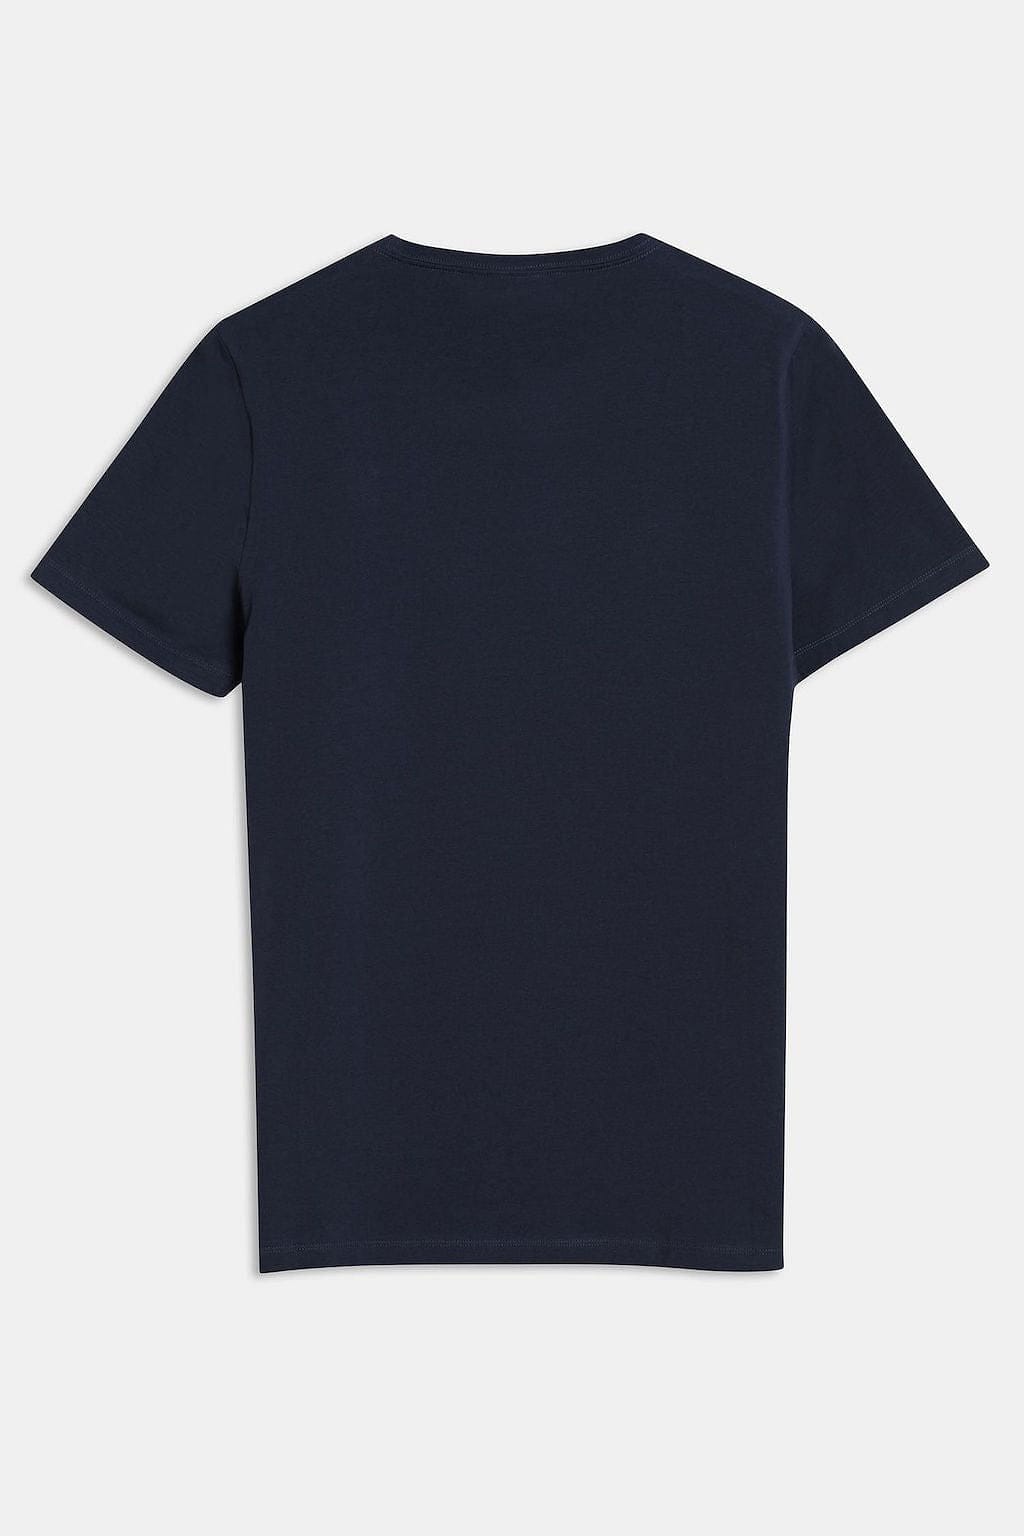 Kyran T-Shirt